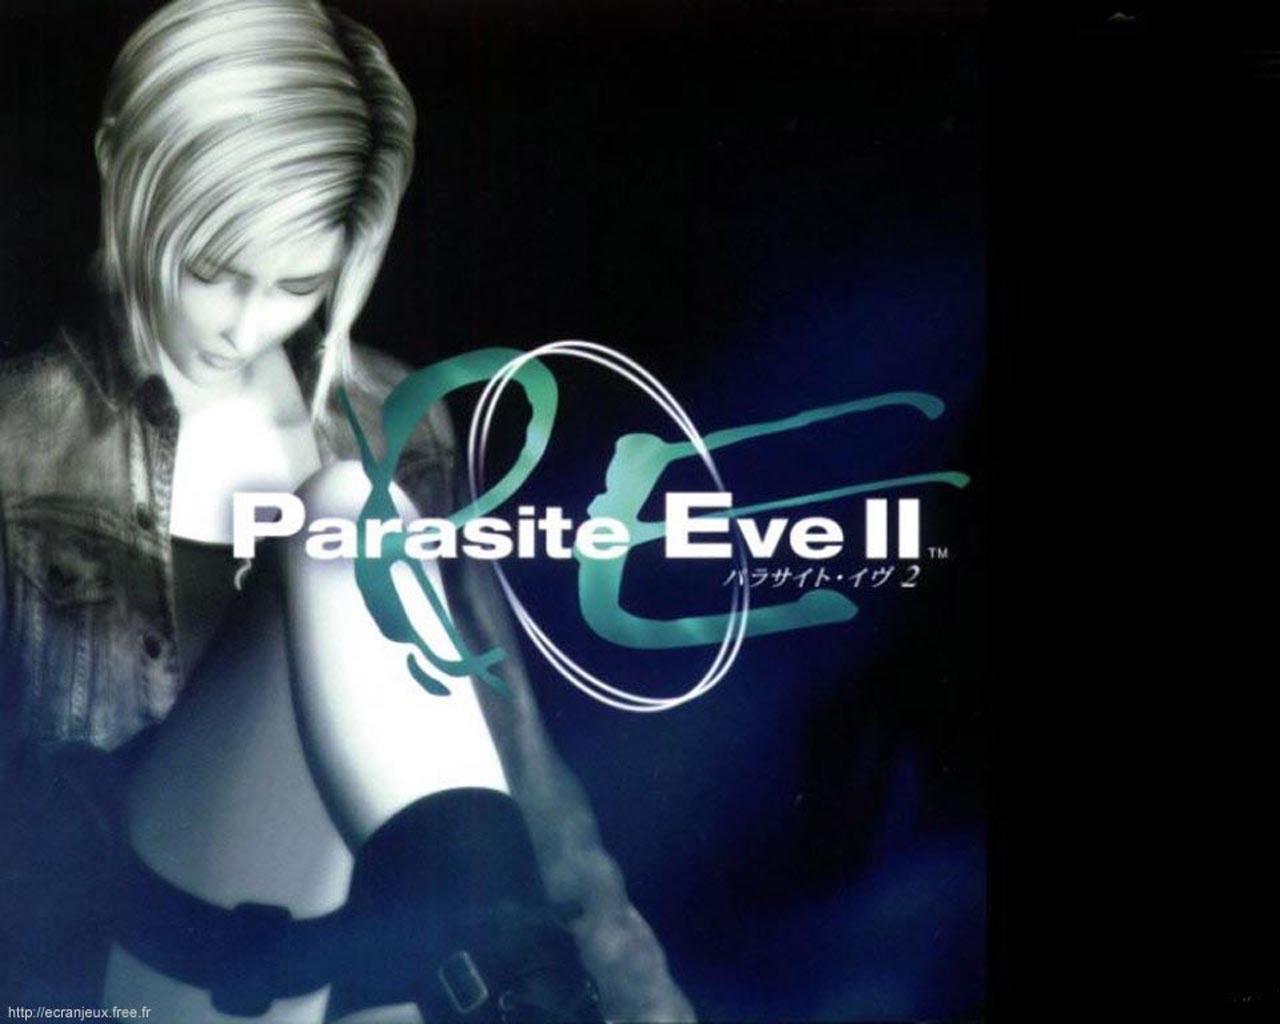 Parasite Eve II Fiche RPG reviews, previews, wallpaper, videos